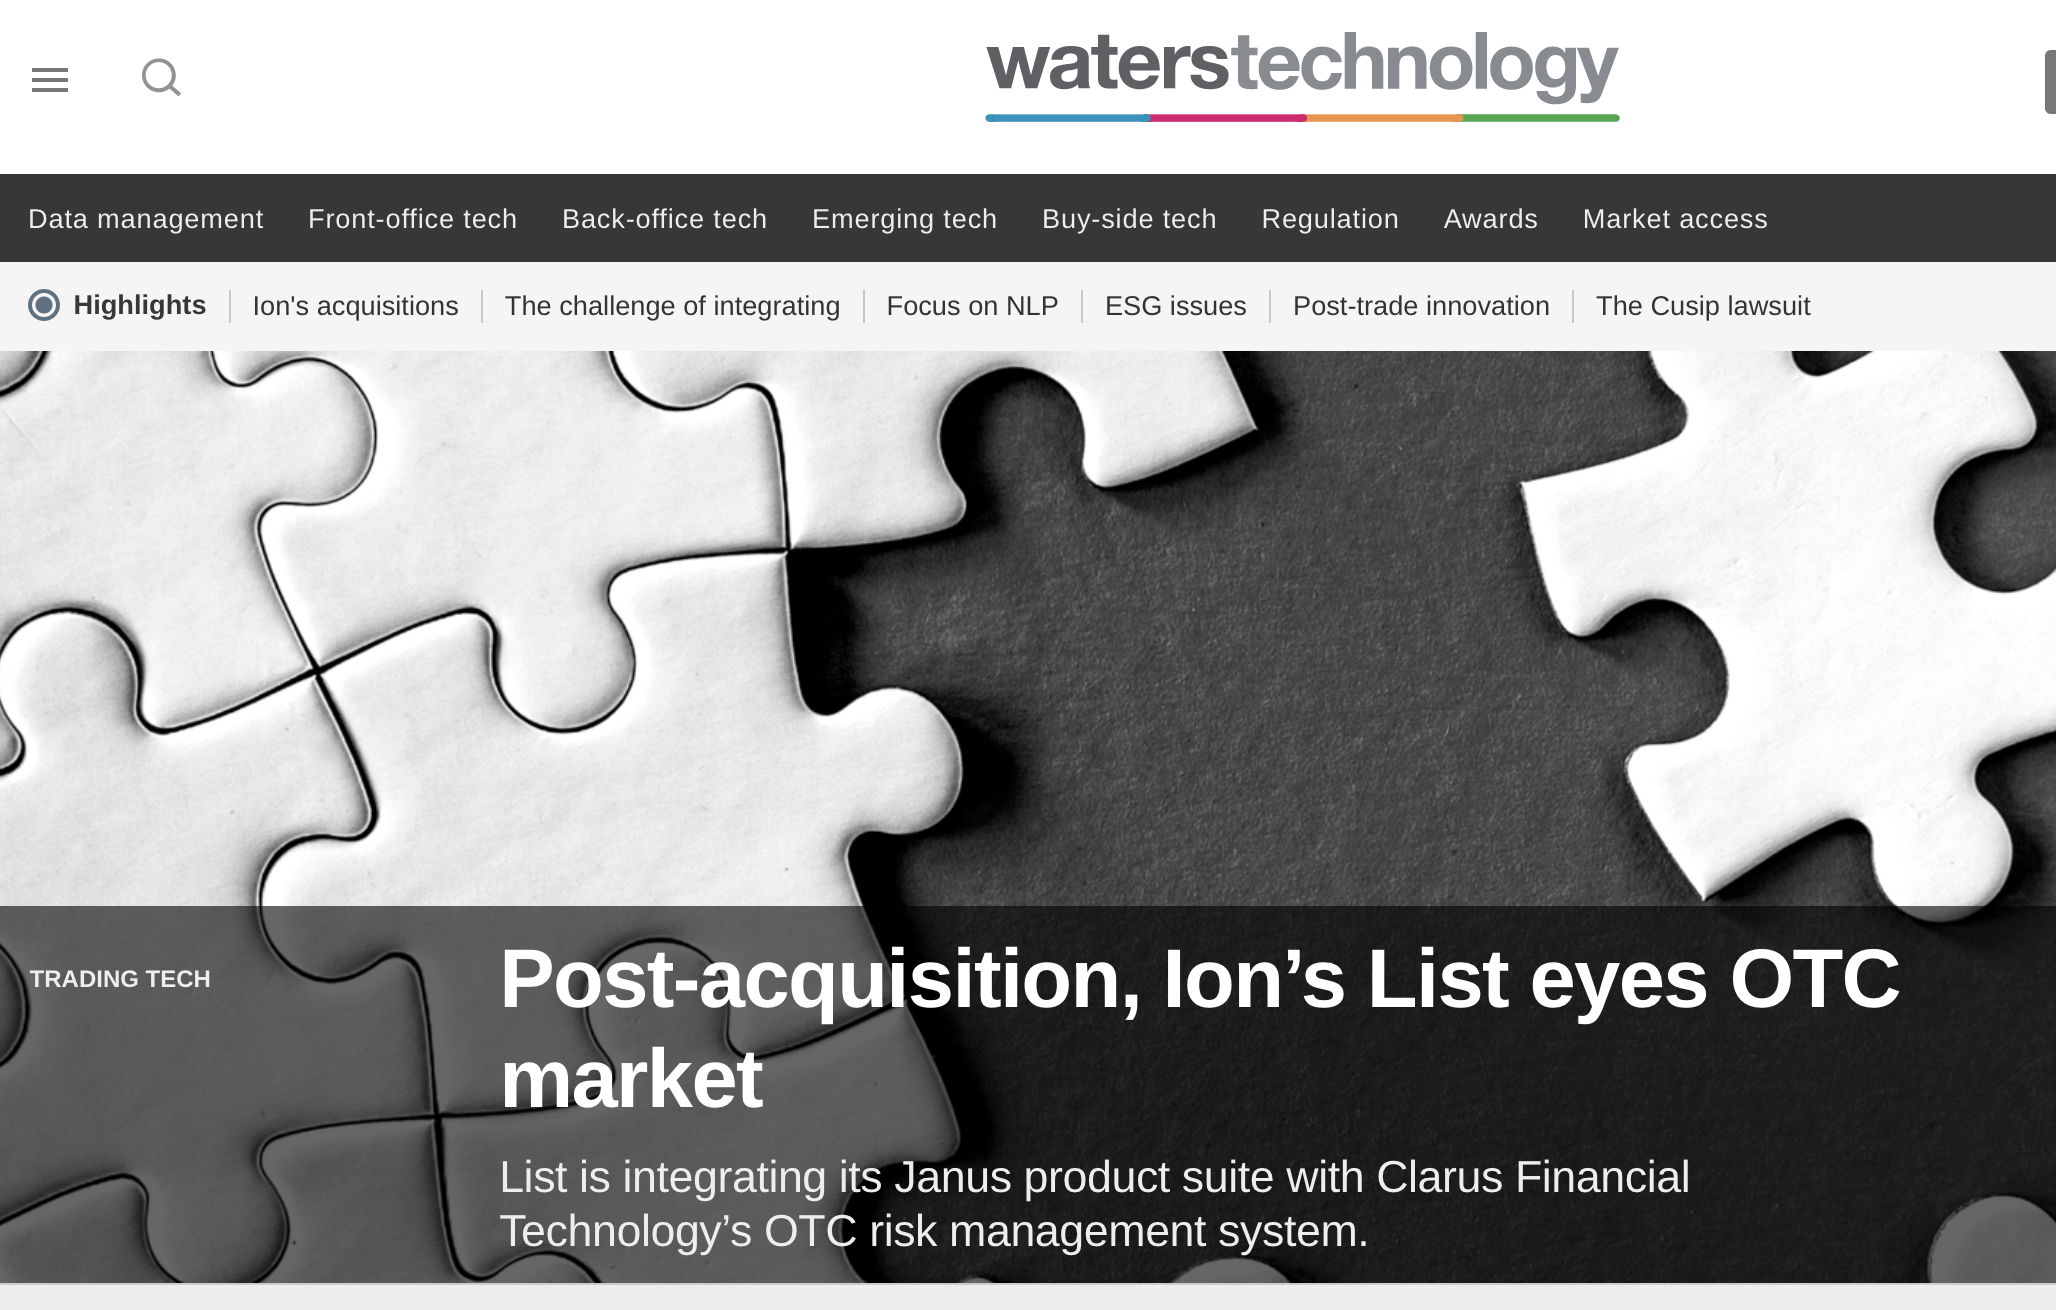 Post-acquisition, Ion’s List eyes OTC market